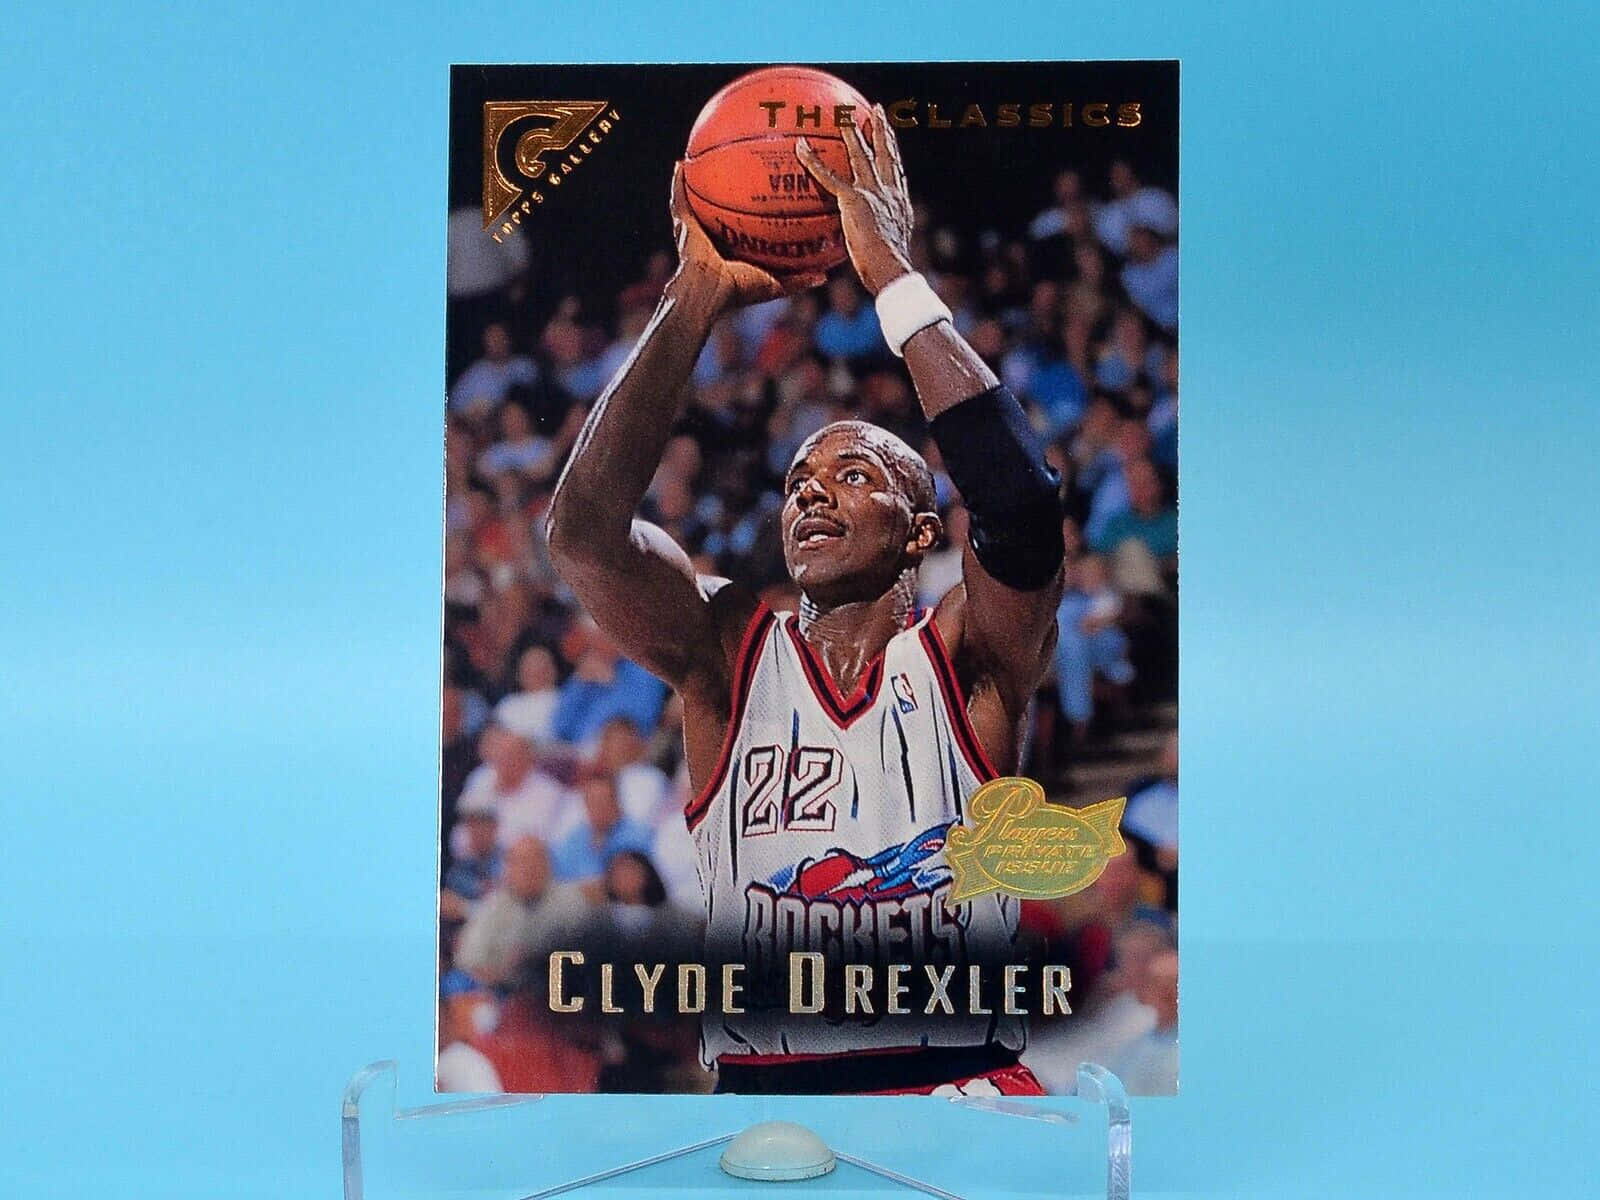 Legends profile: Clyde Drexler